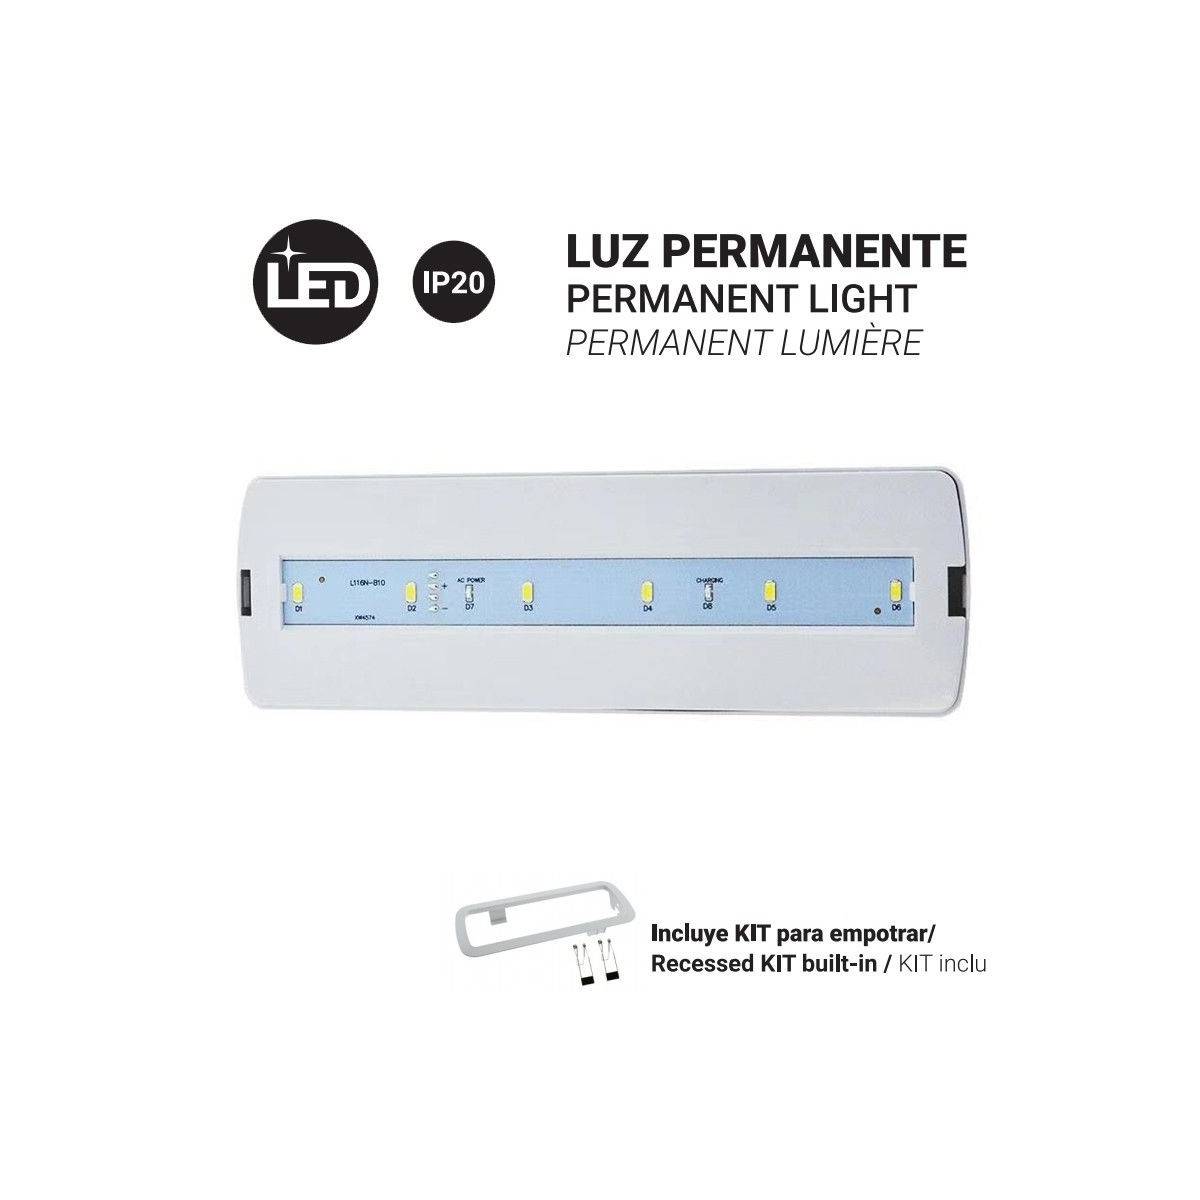 Permanent emergency light 3W - 250lm - 3h of autonomy